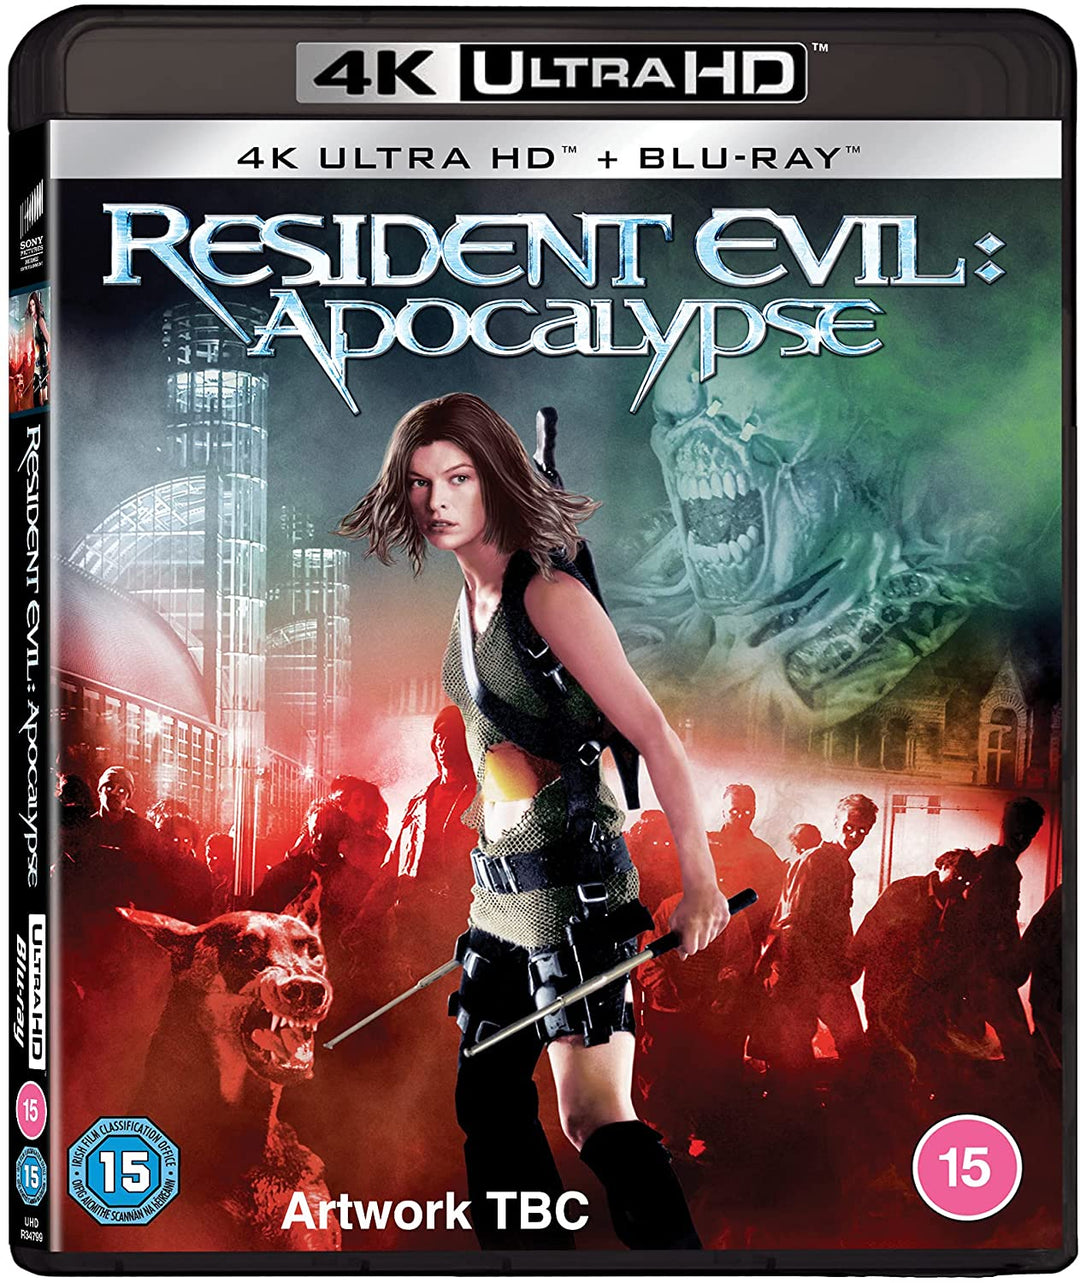 Resident Evil: Apocalypse (2004) (2 Discs - UHD & BD) -  Action/Horror [Blu-ray]